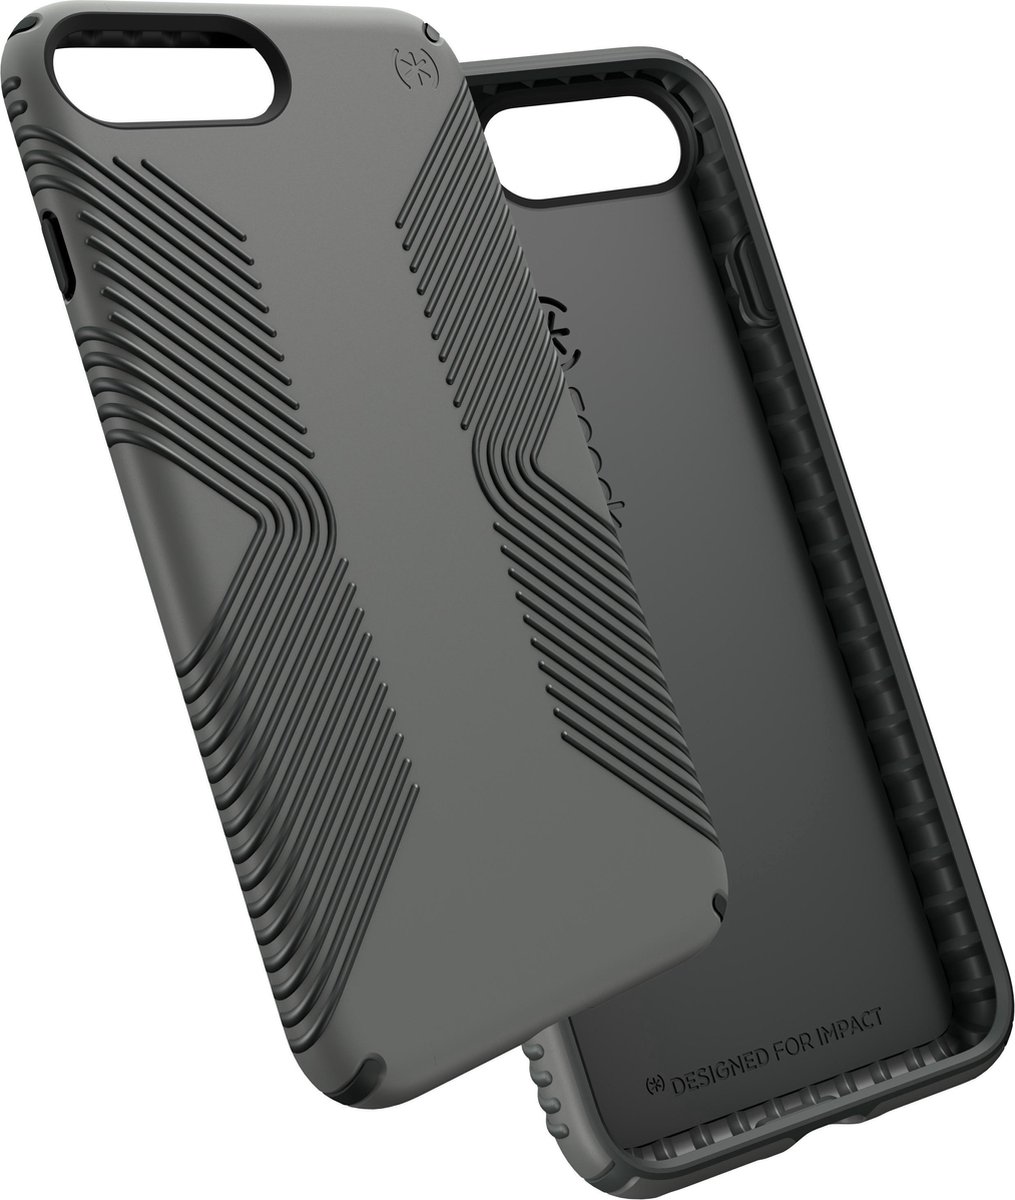 Speck Presidio Grip - Hoesje voor iPhone 7 Plus - Graphite Grey / Charcoal Grey